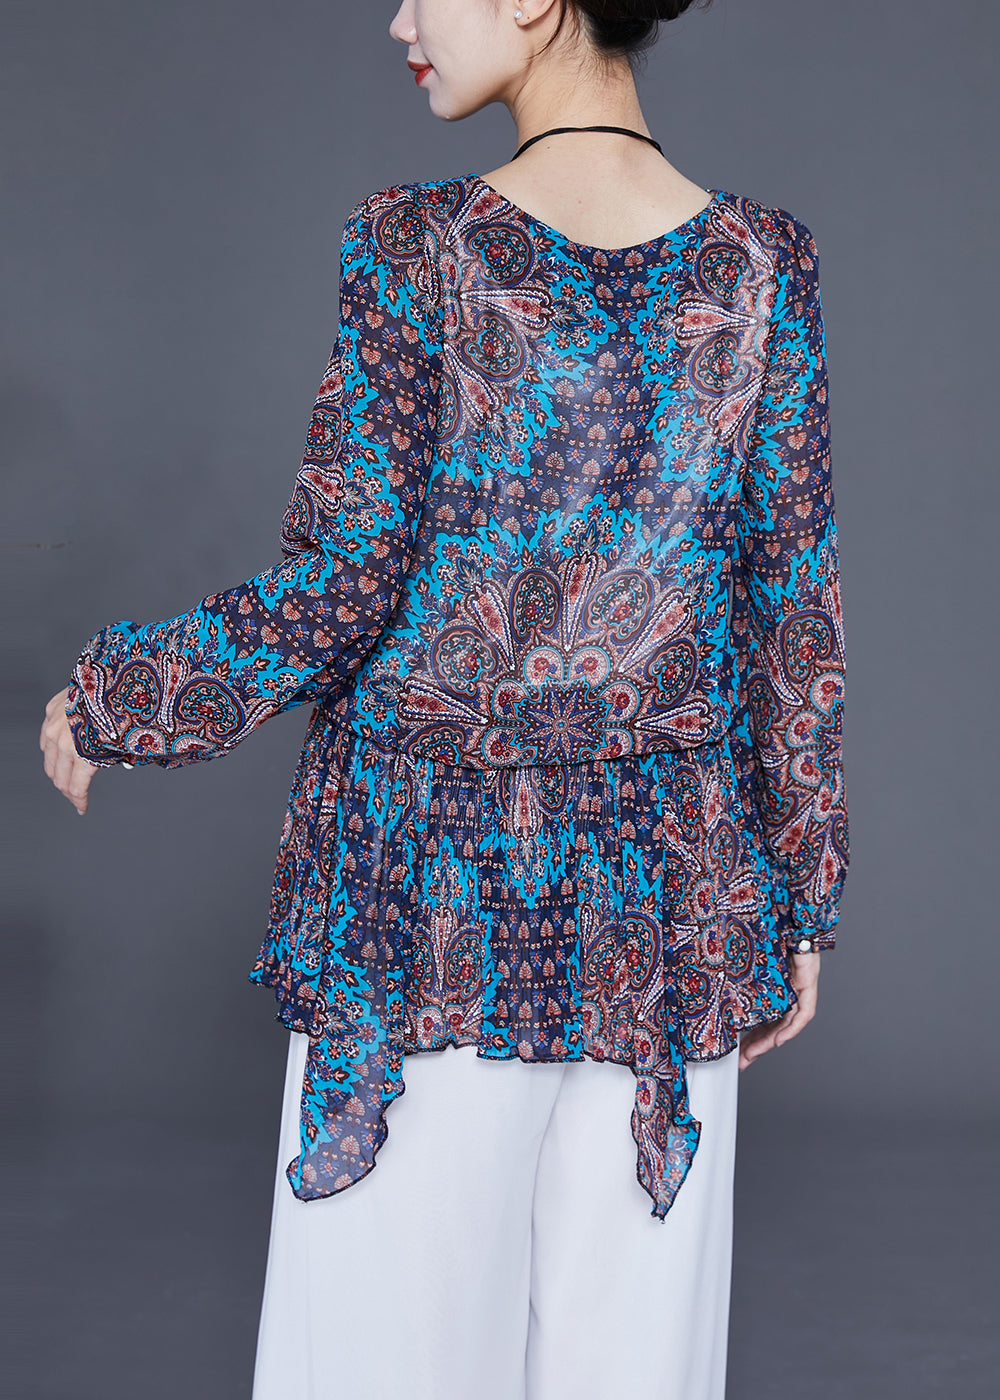 Blue Print Chiffon Shirt Tops Asymmetrical Hem Spring LY2335 - fabuloryshop